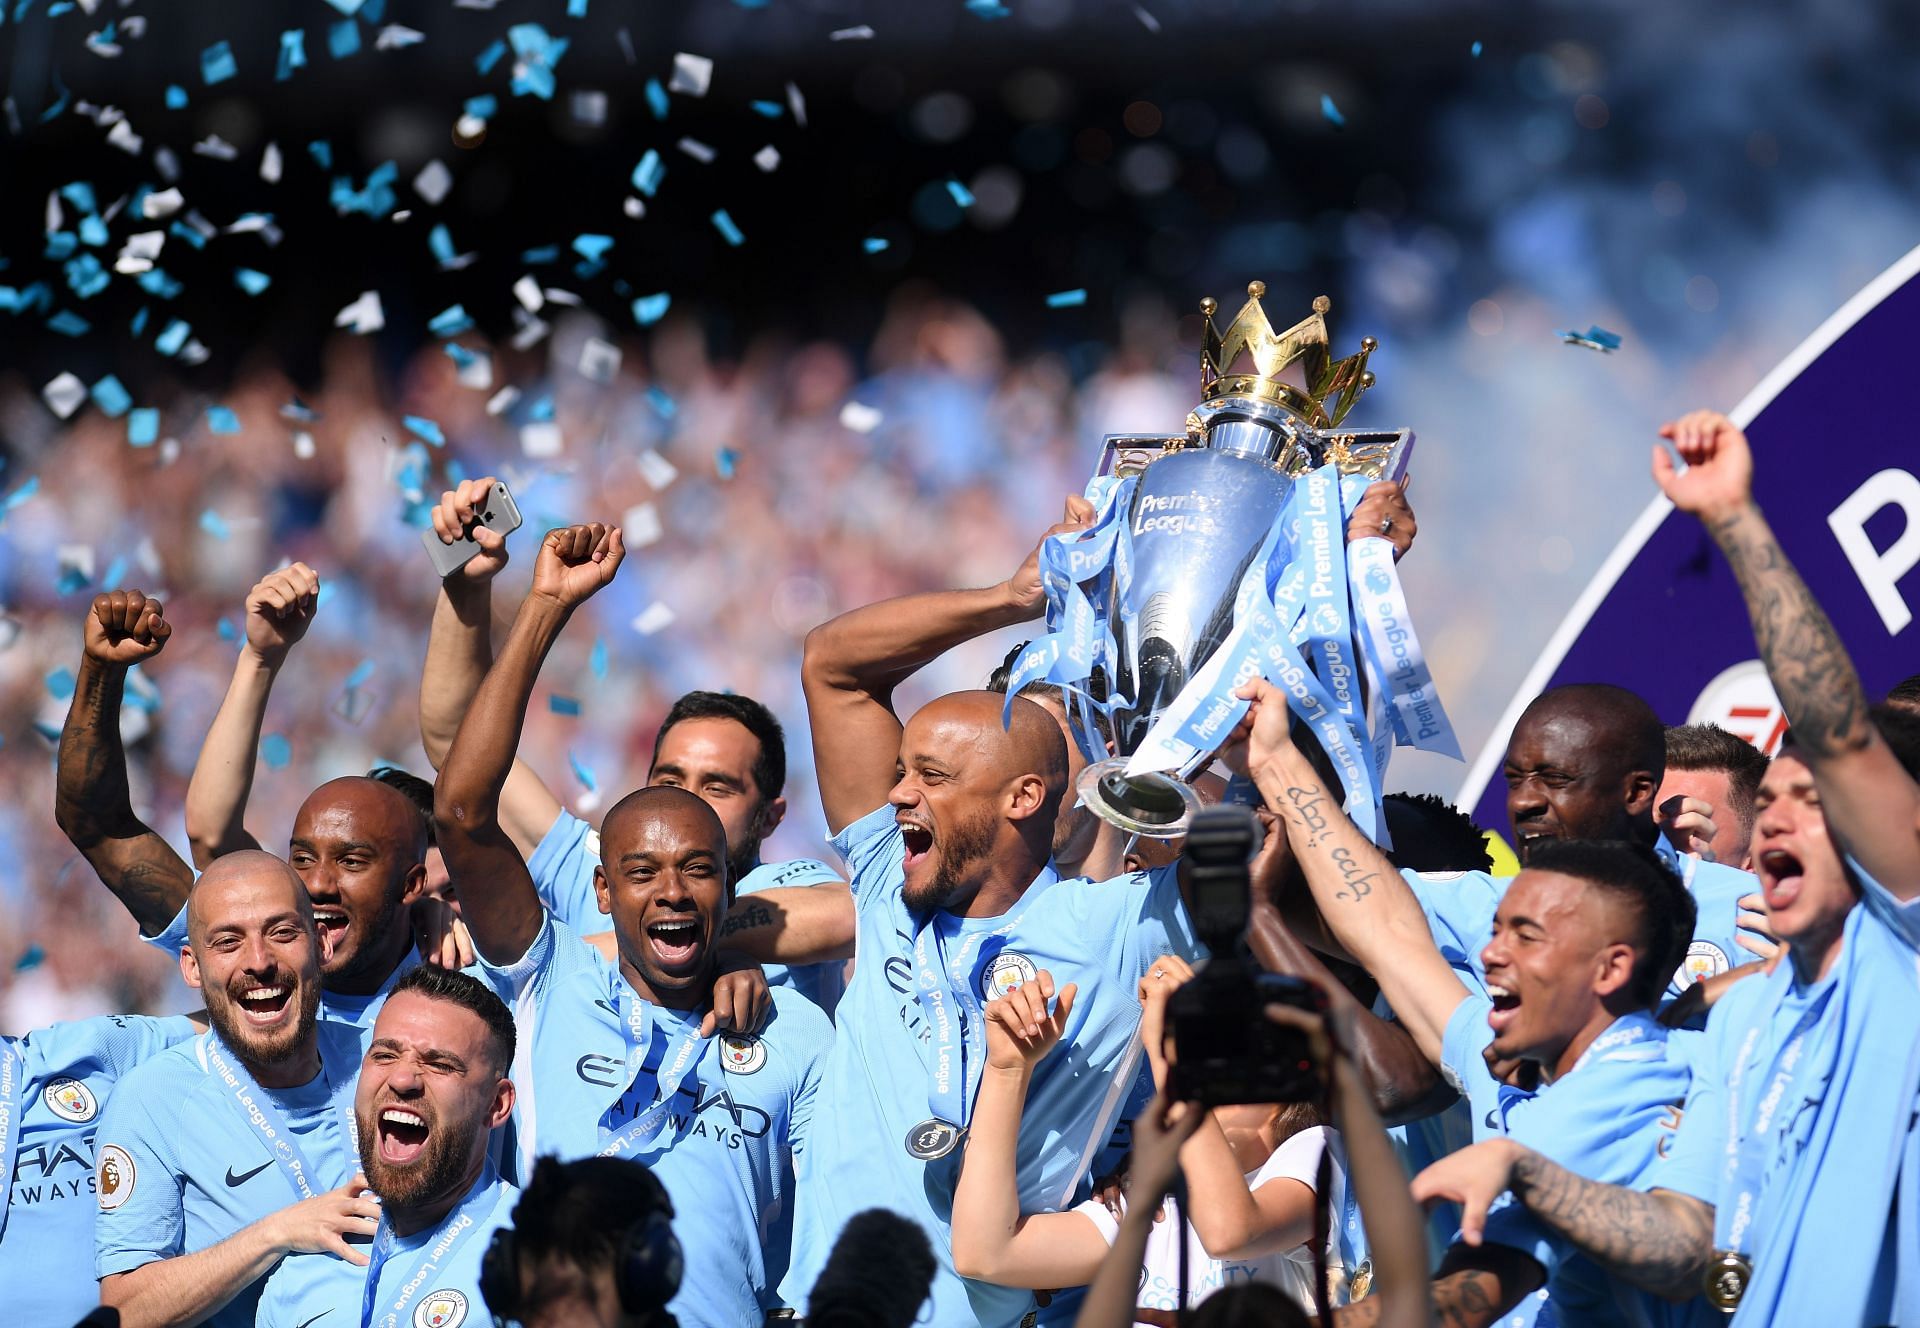 Manchester City players celebrating a historic 2017-18 season